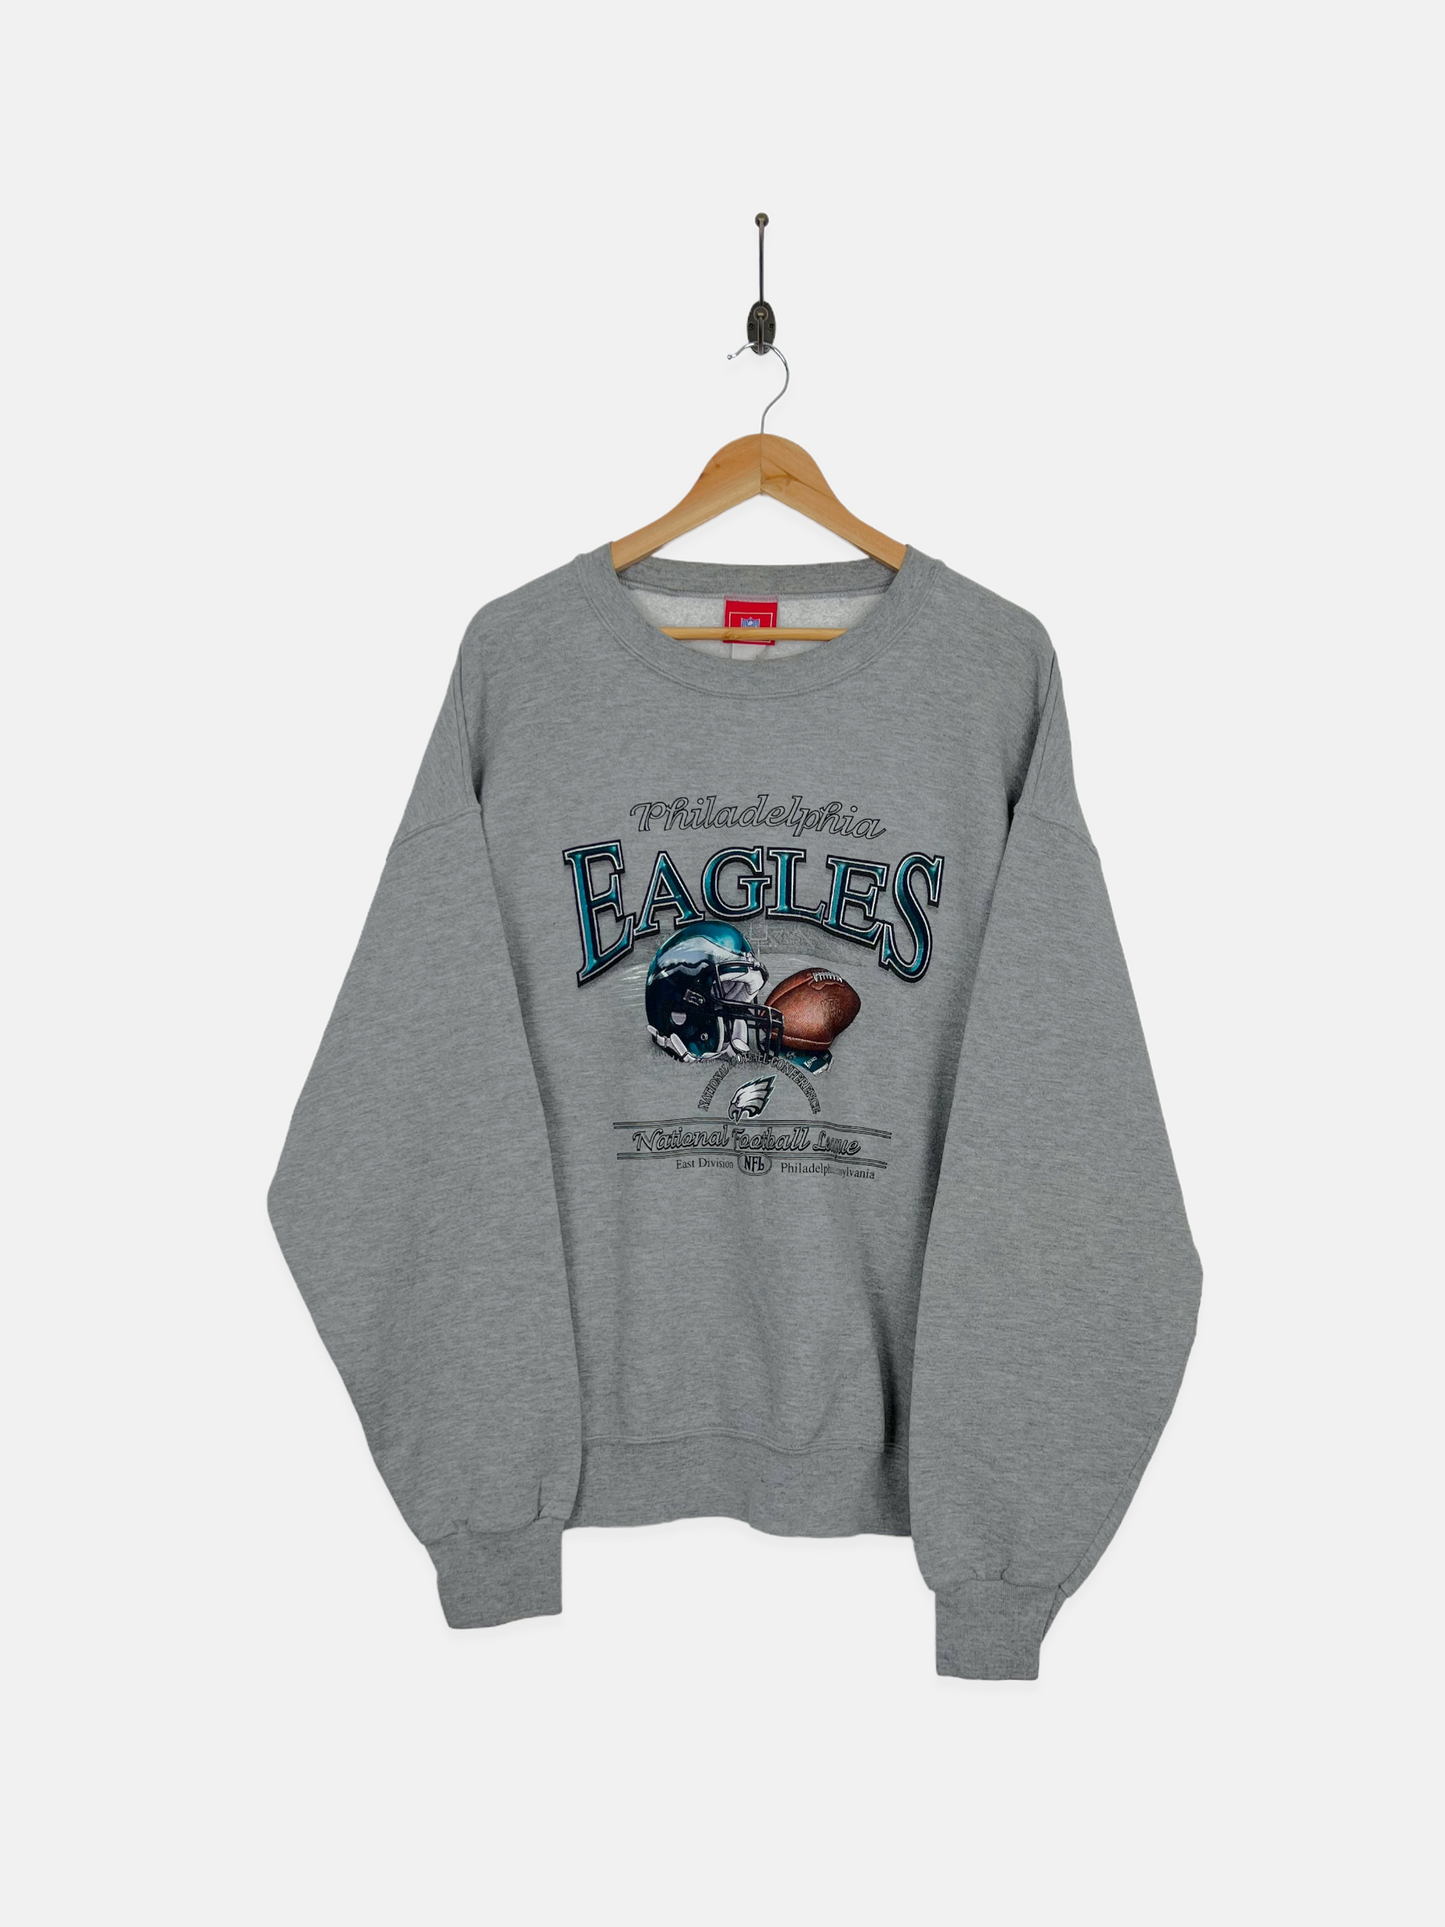 90's Philadelphia Eagles NFL Vintage Sweatshirt Size L-XL